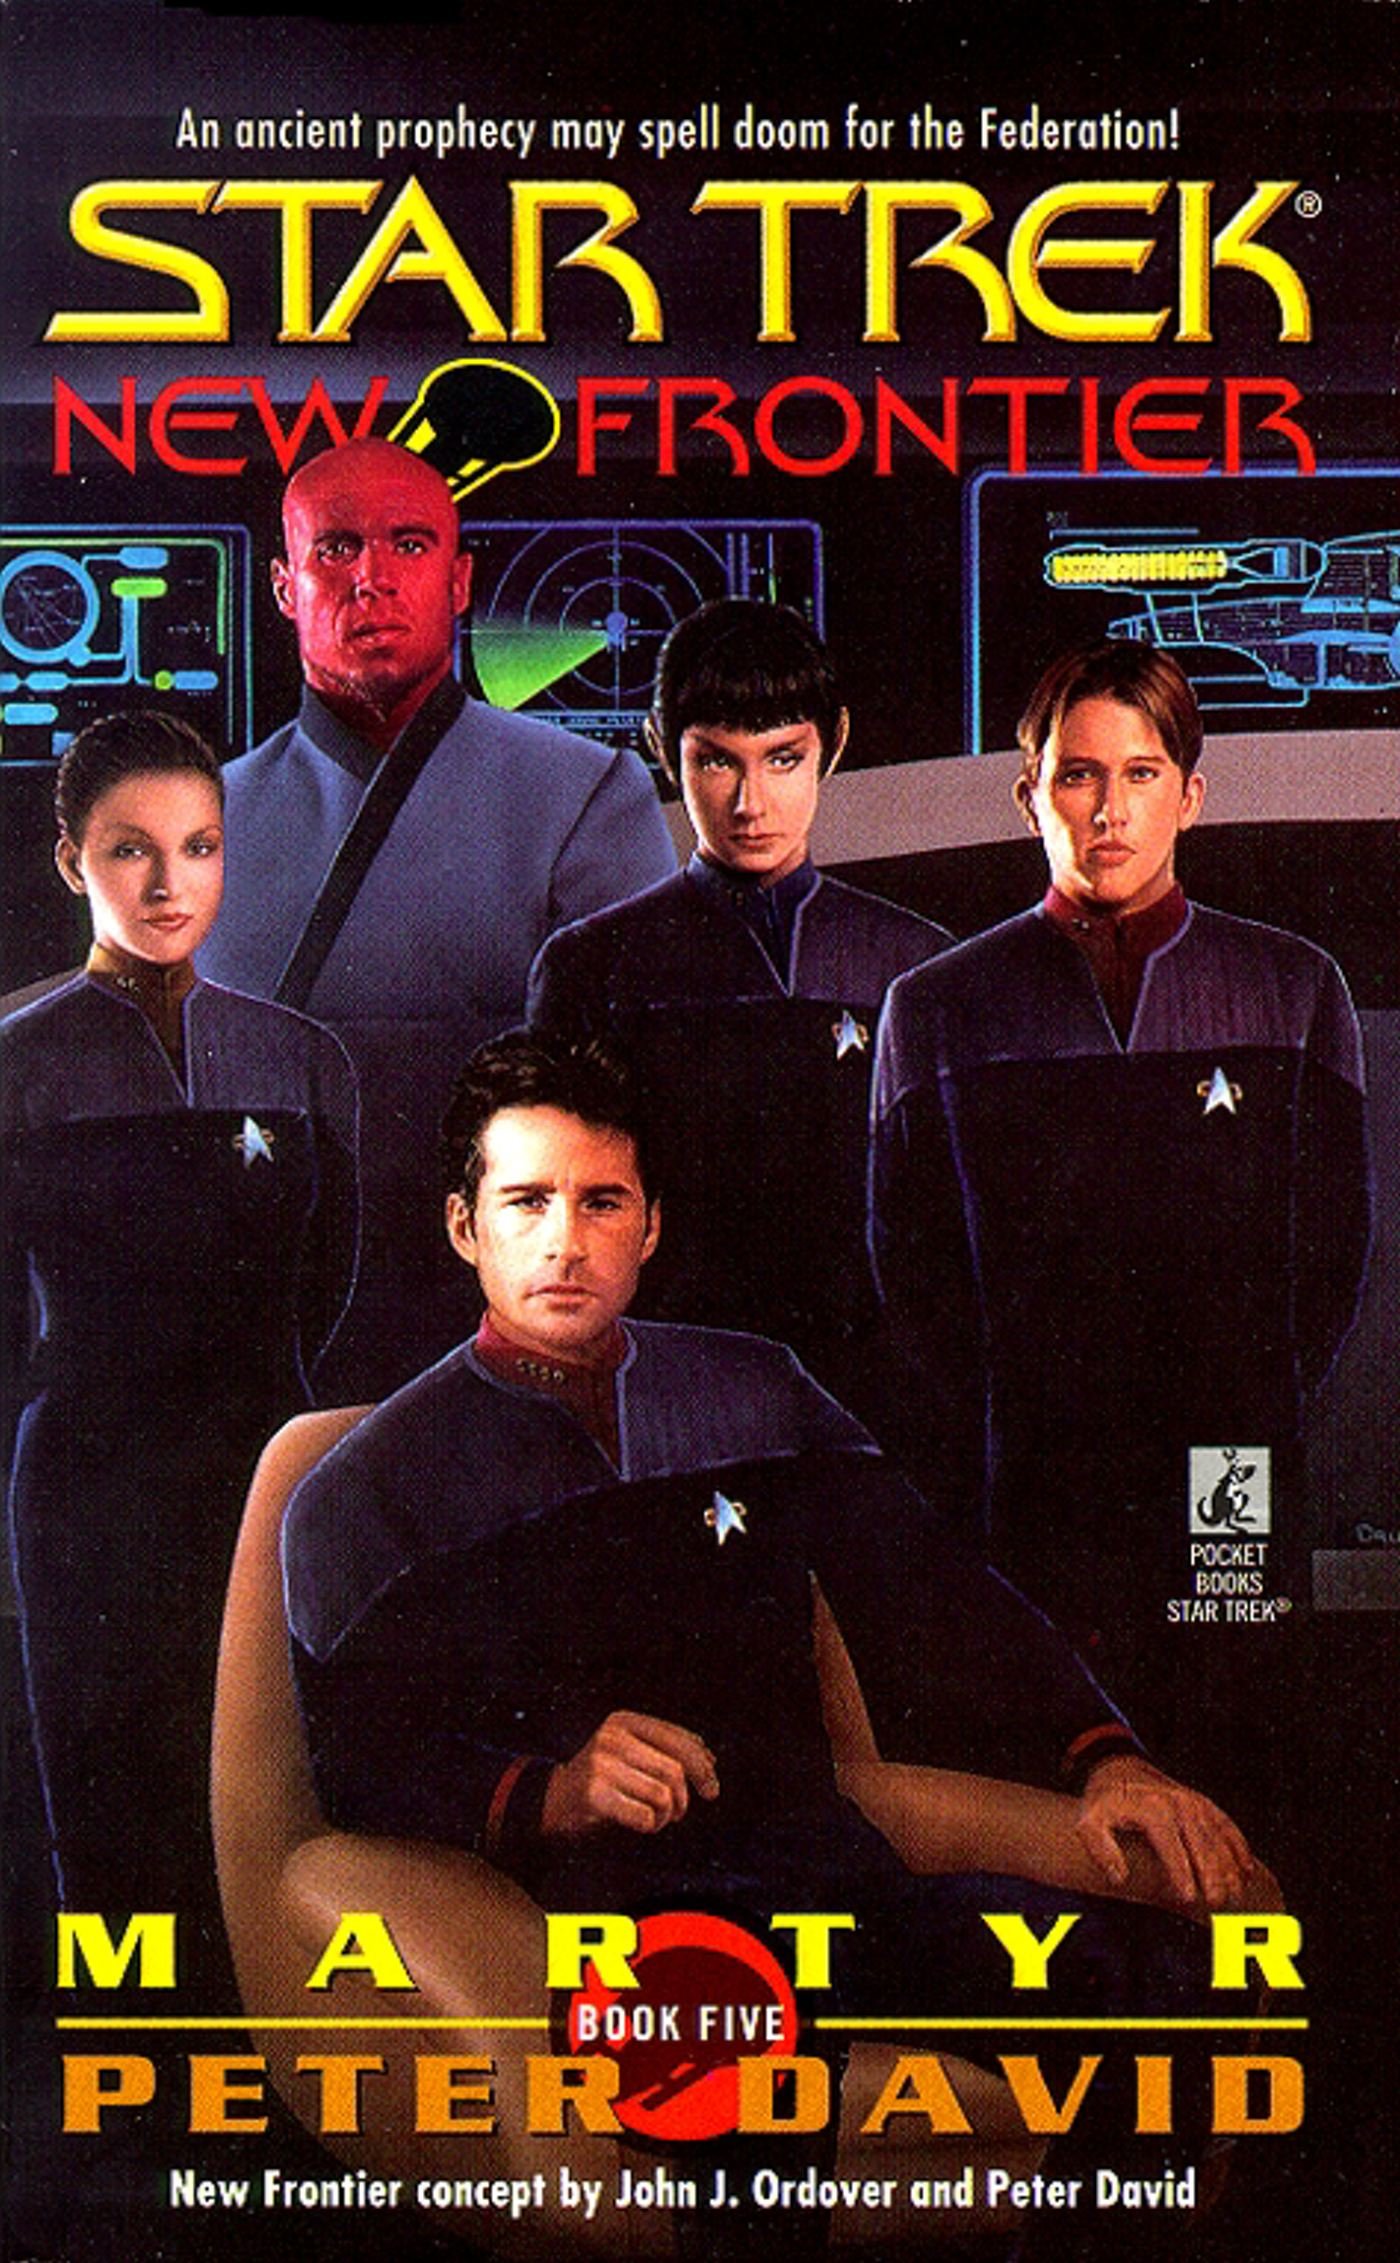 “Star Trek: New Frontier: 5 Martyr” Review by Deepspacespines.com